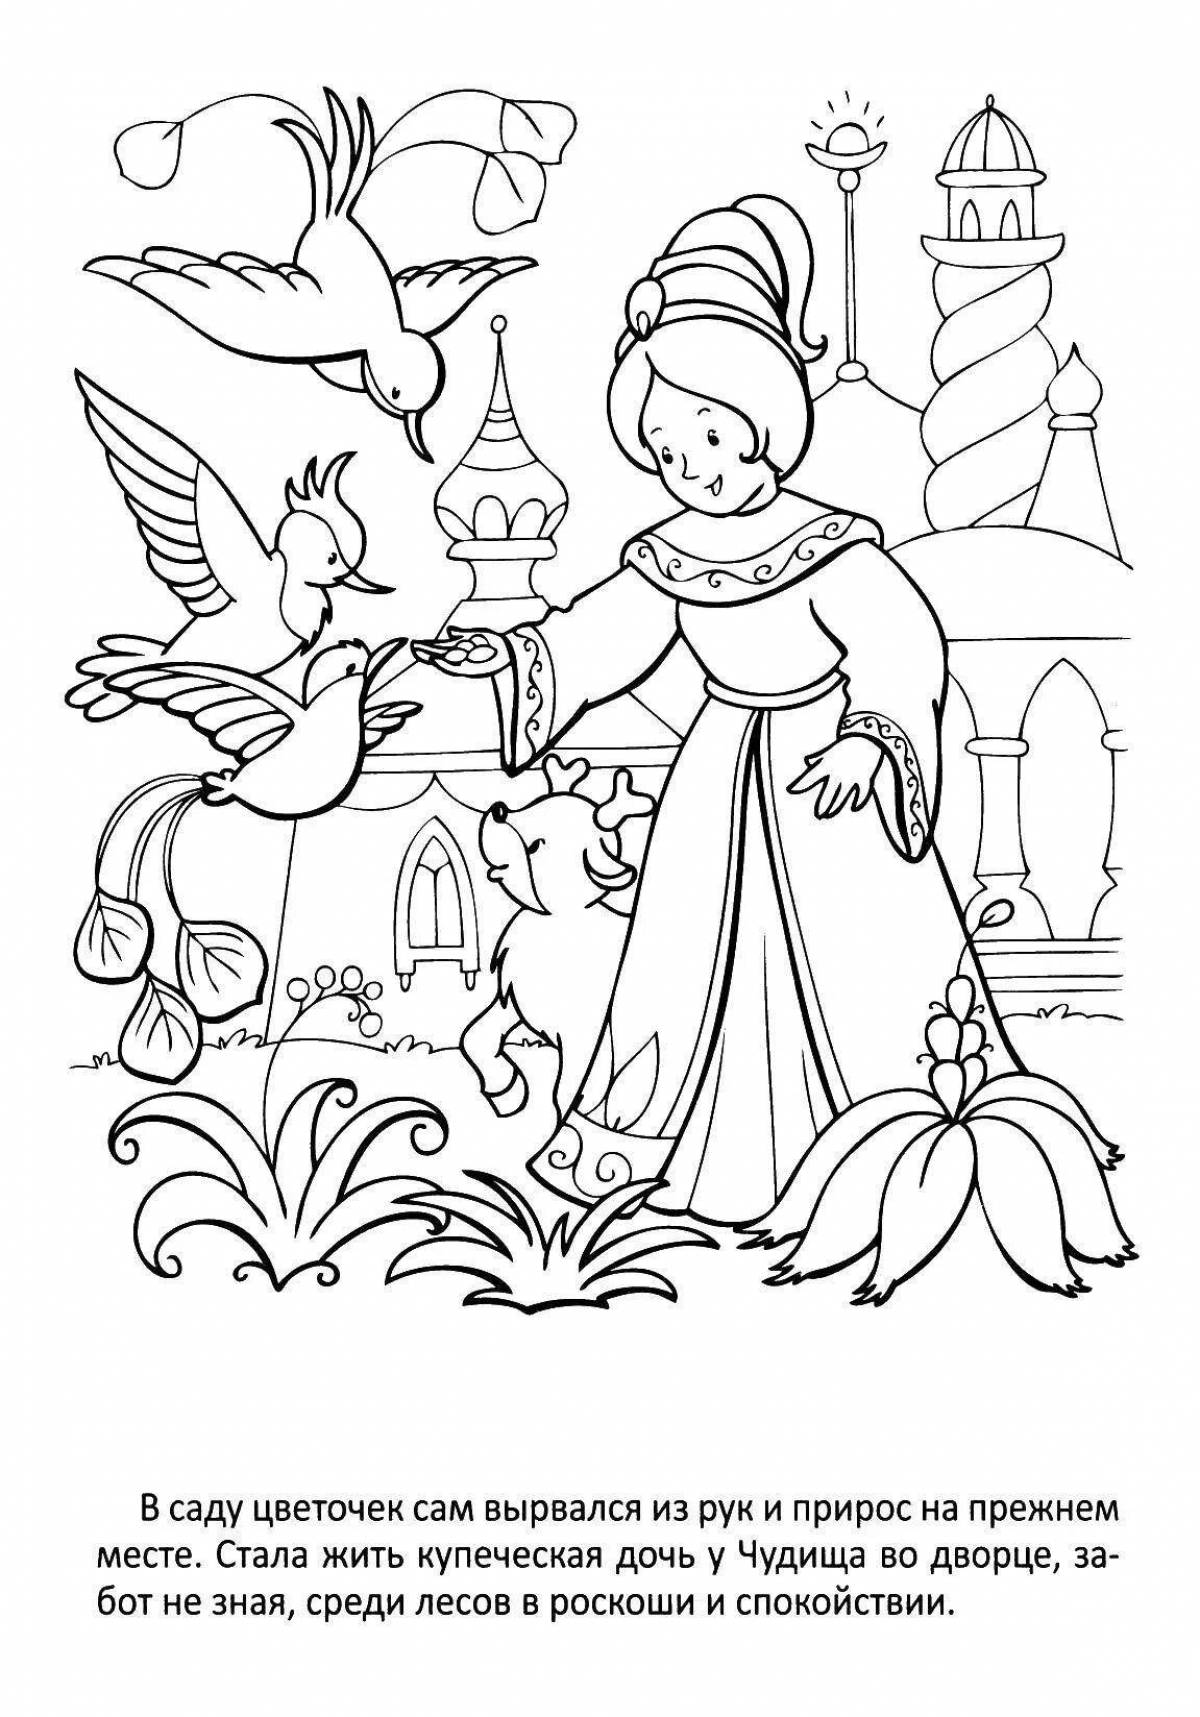 Joyful coloring book based on Pushkin's fairy tales